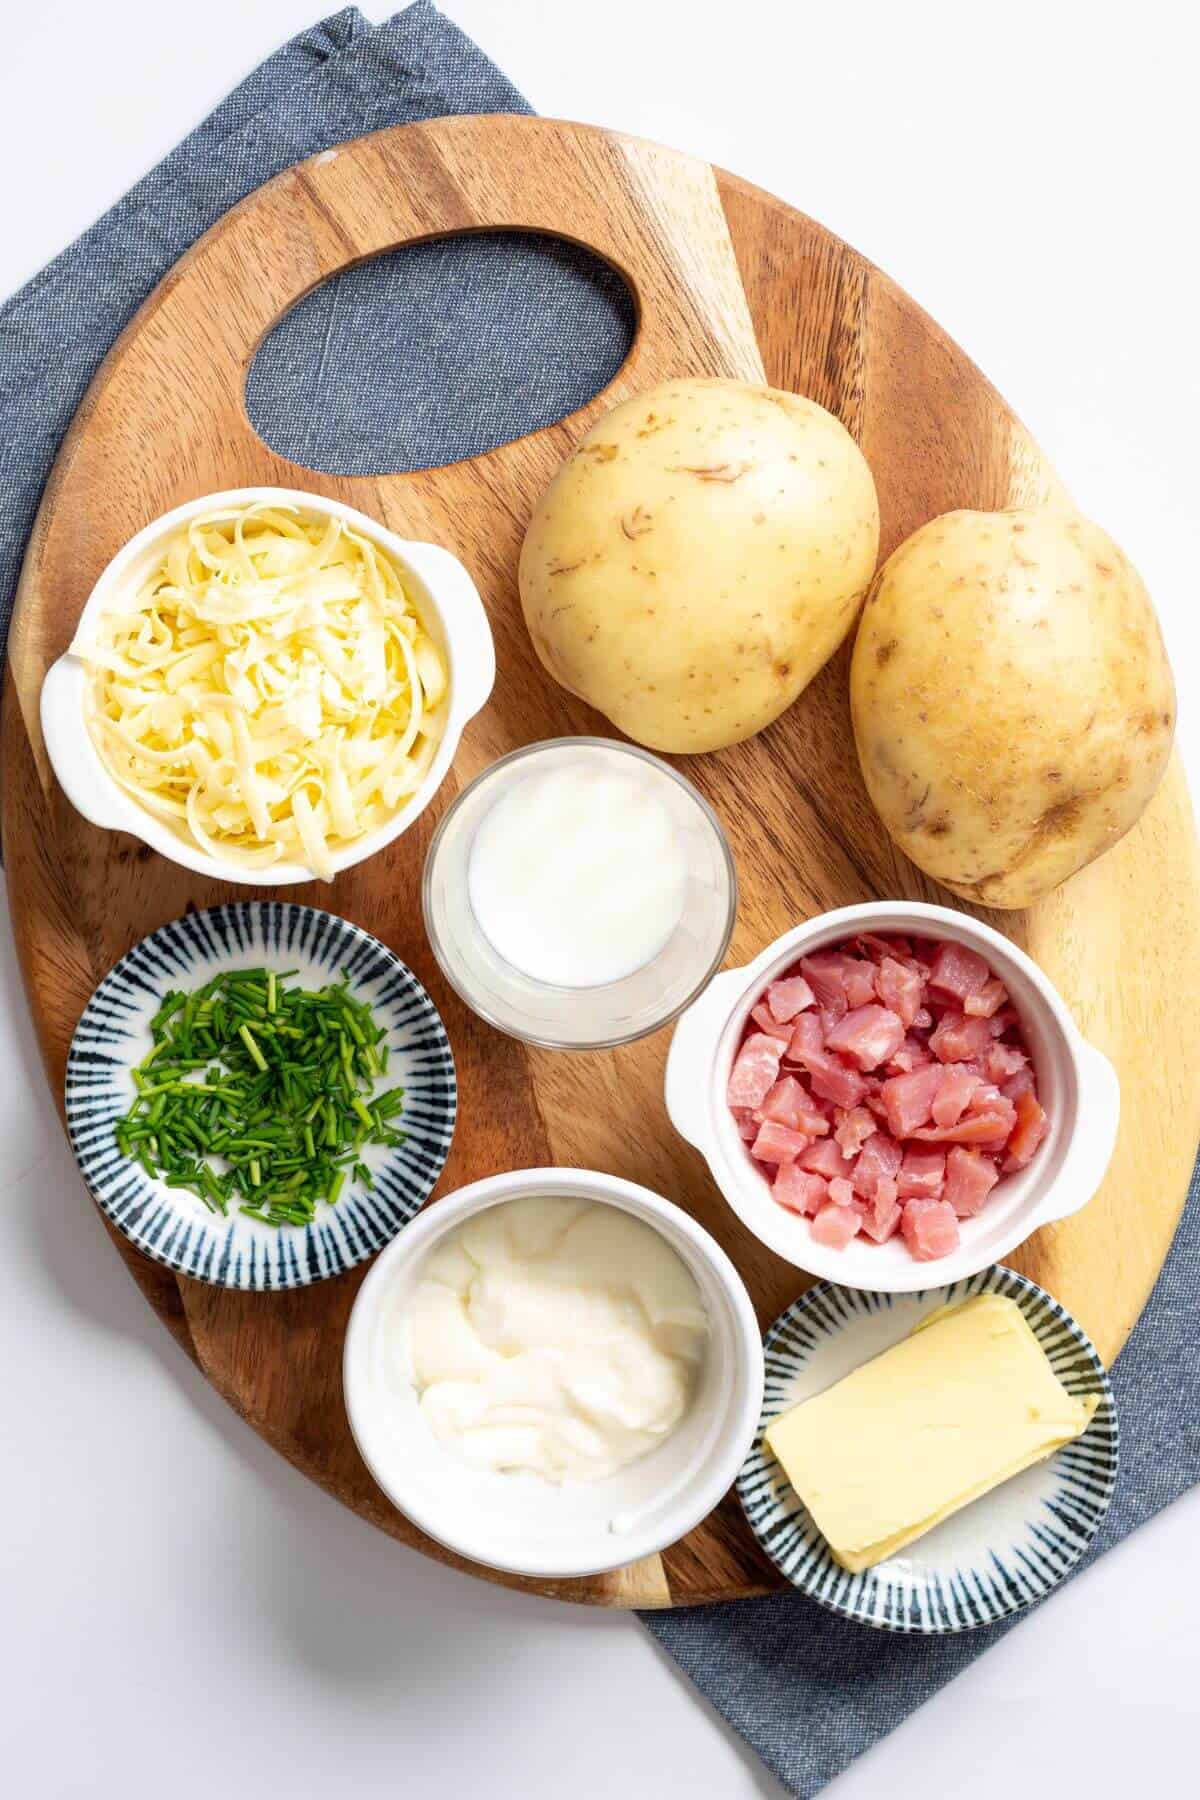 Ingredients for twice baked potato recipe.